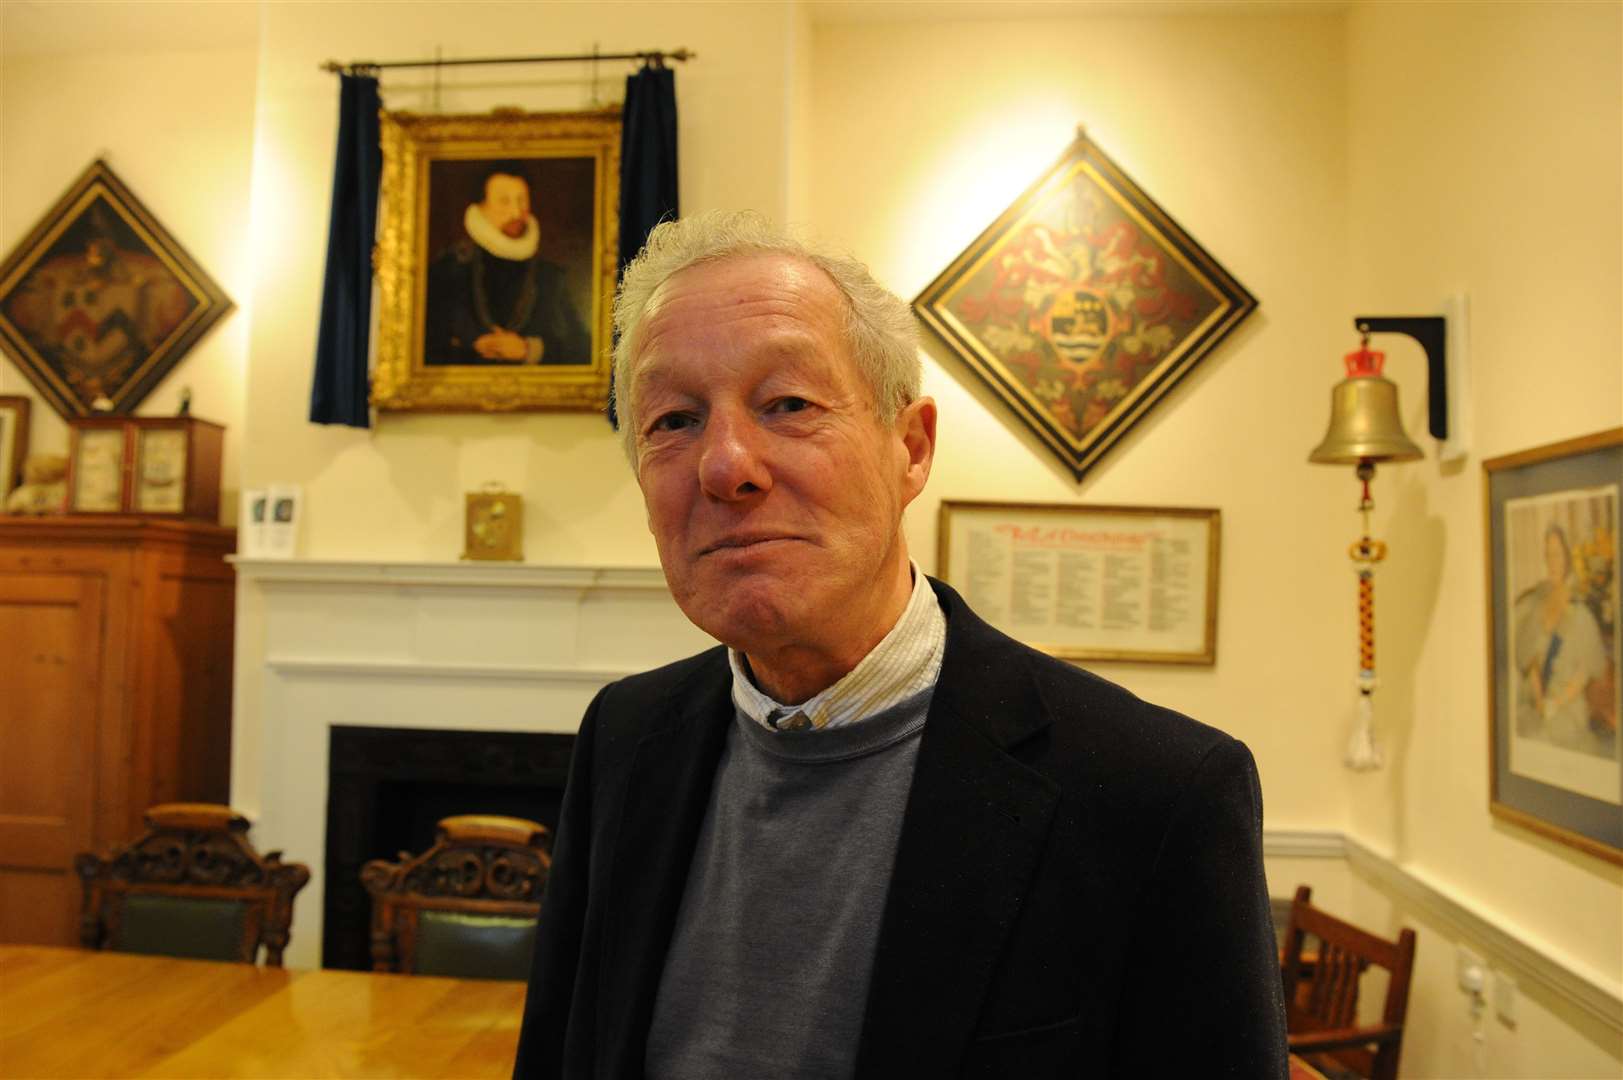 Chairman Neil Wood paid tribute to Queen Elizabeth II